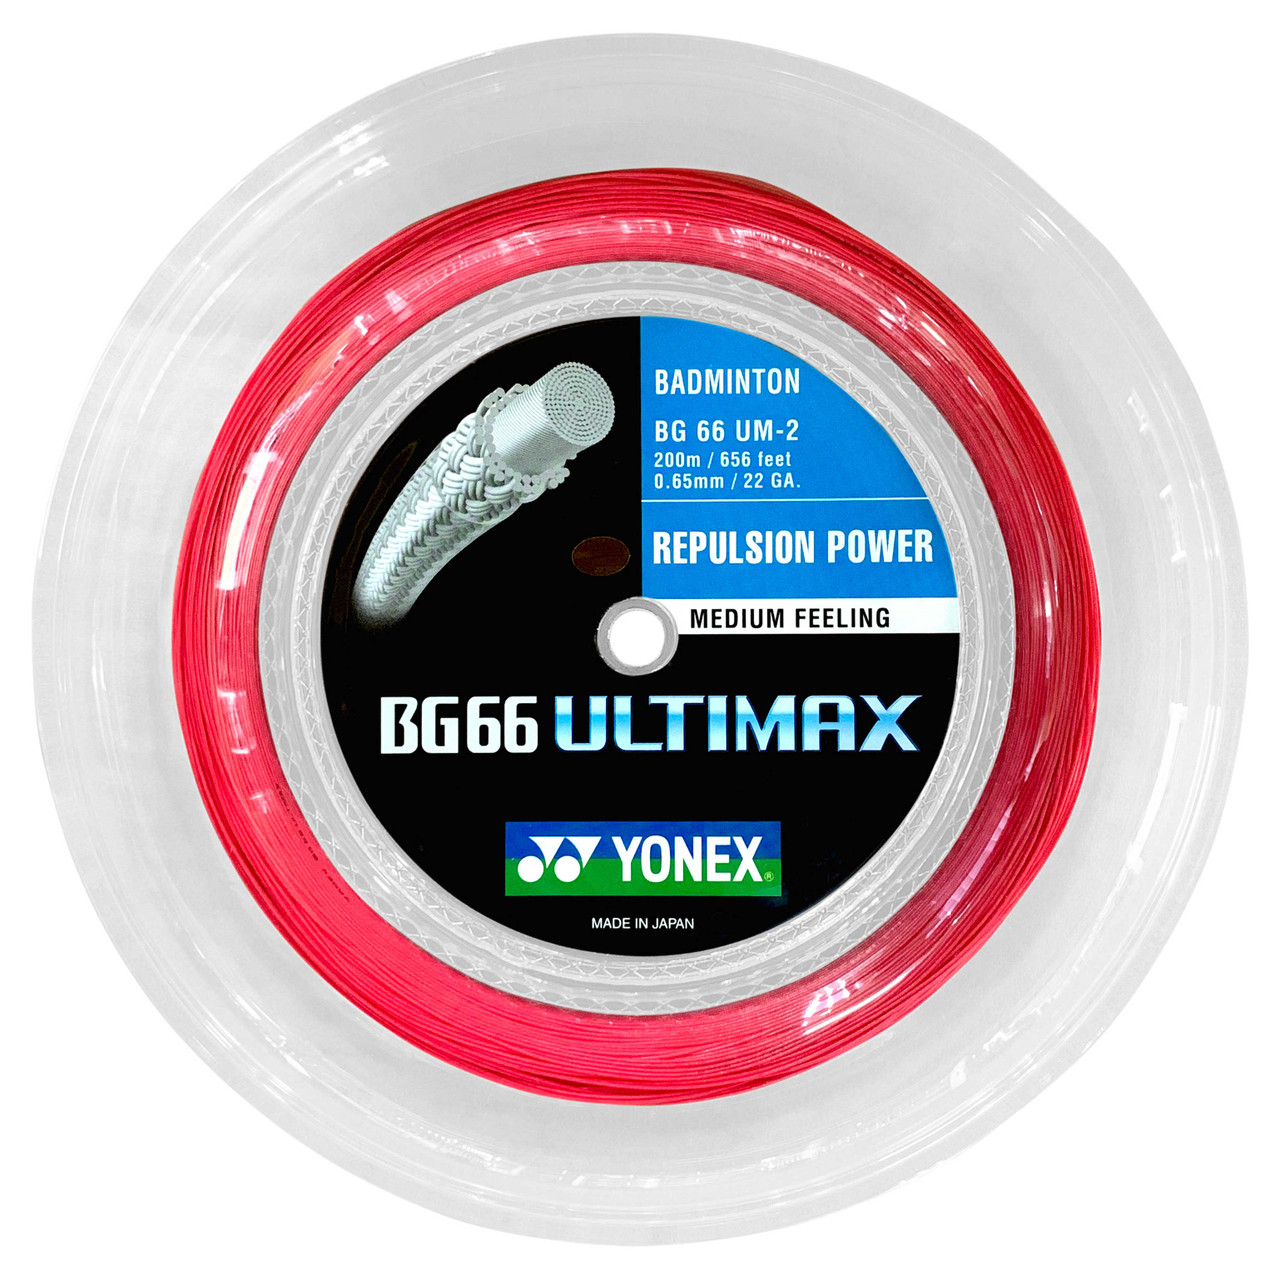 Yonex BG66 Ultimax 0.65mm Badminton 200M Reel - W & D Strings